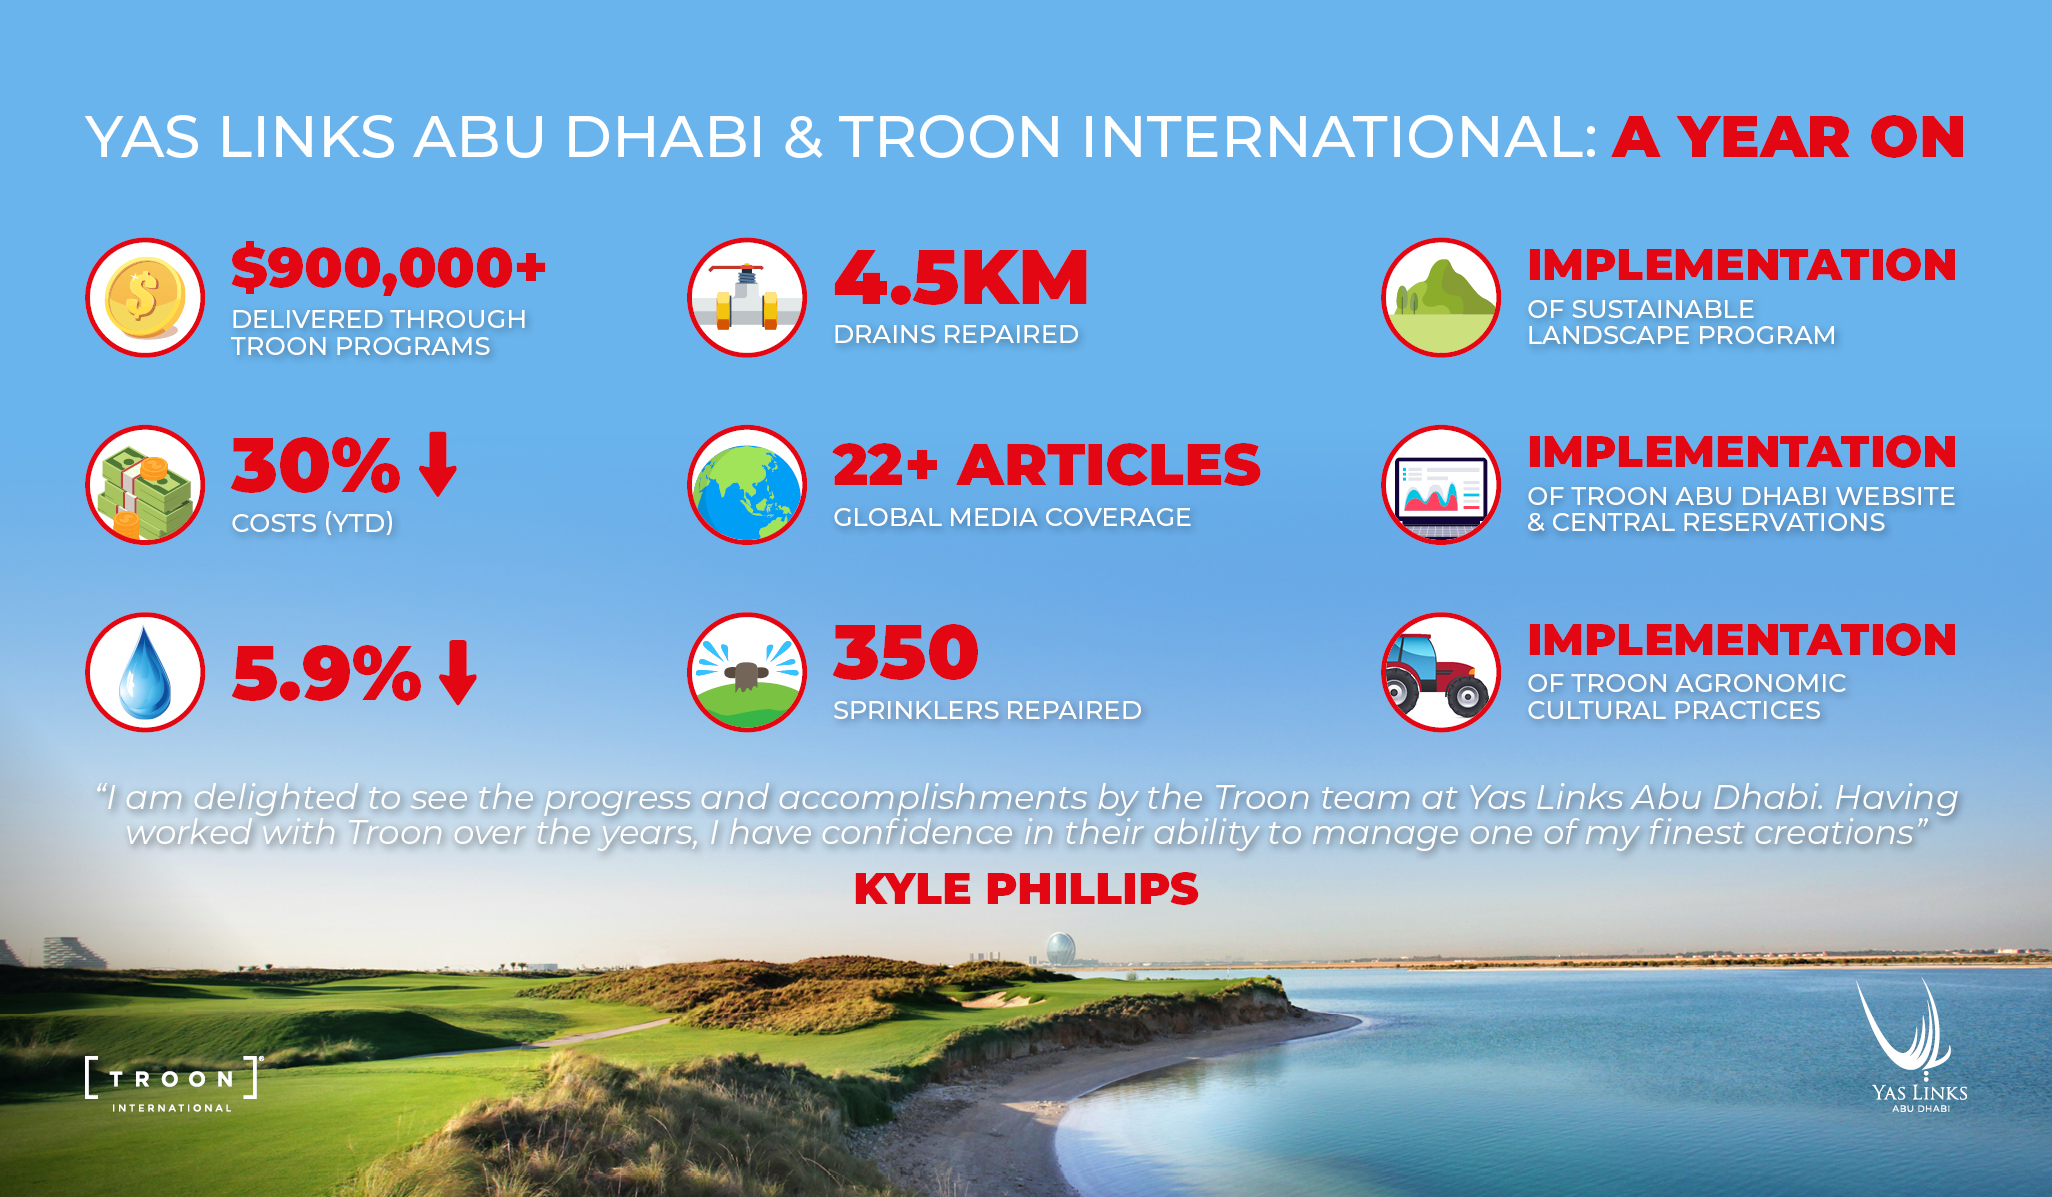 Yas-Links-Abu-Dhabi-Troon-A-Year-On